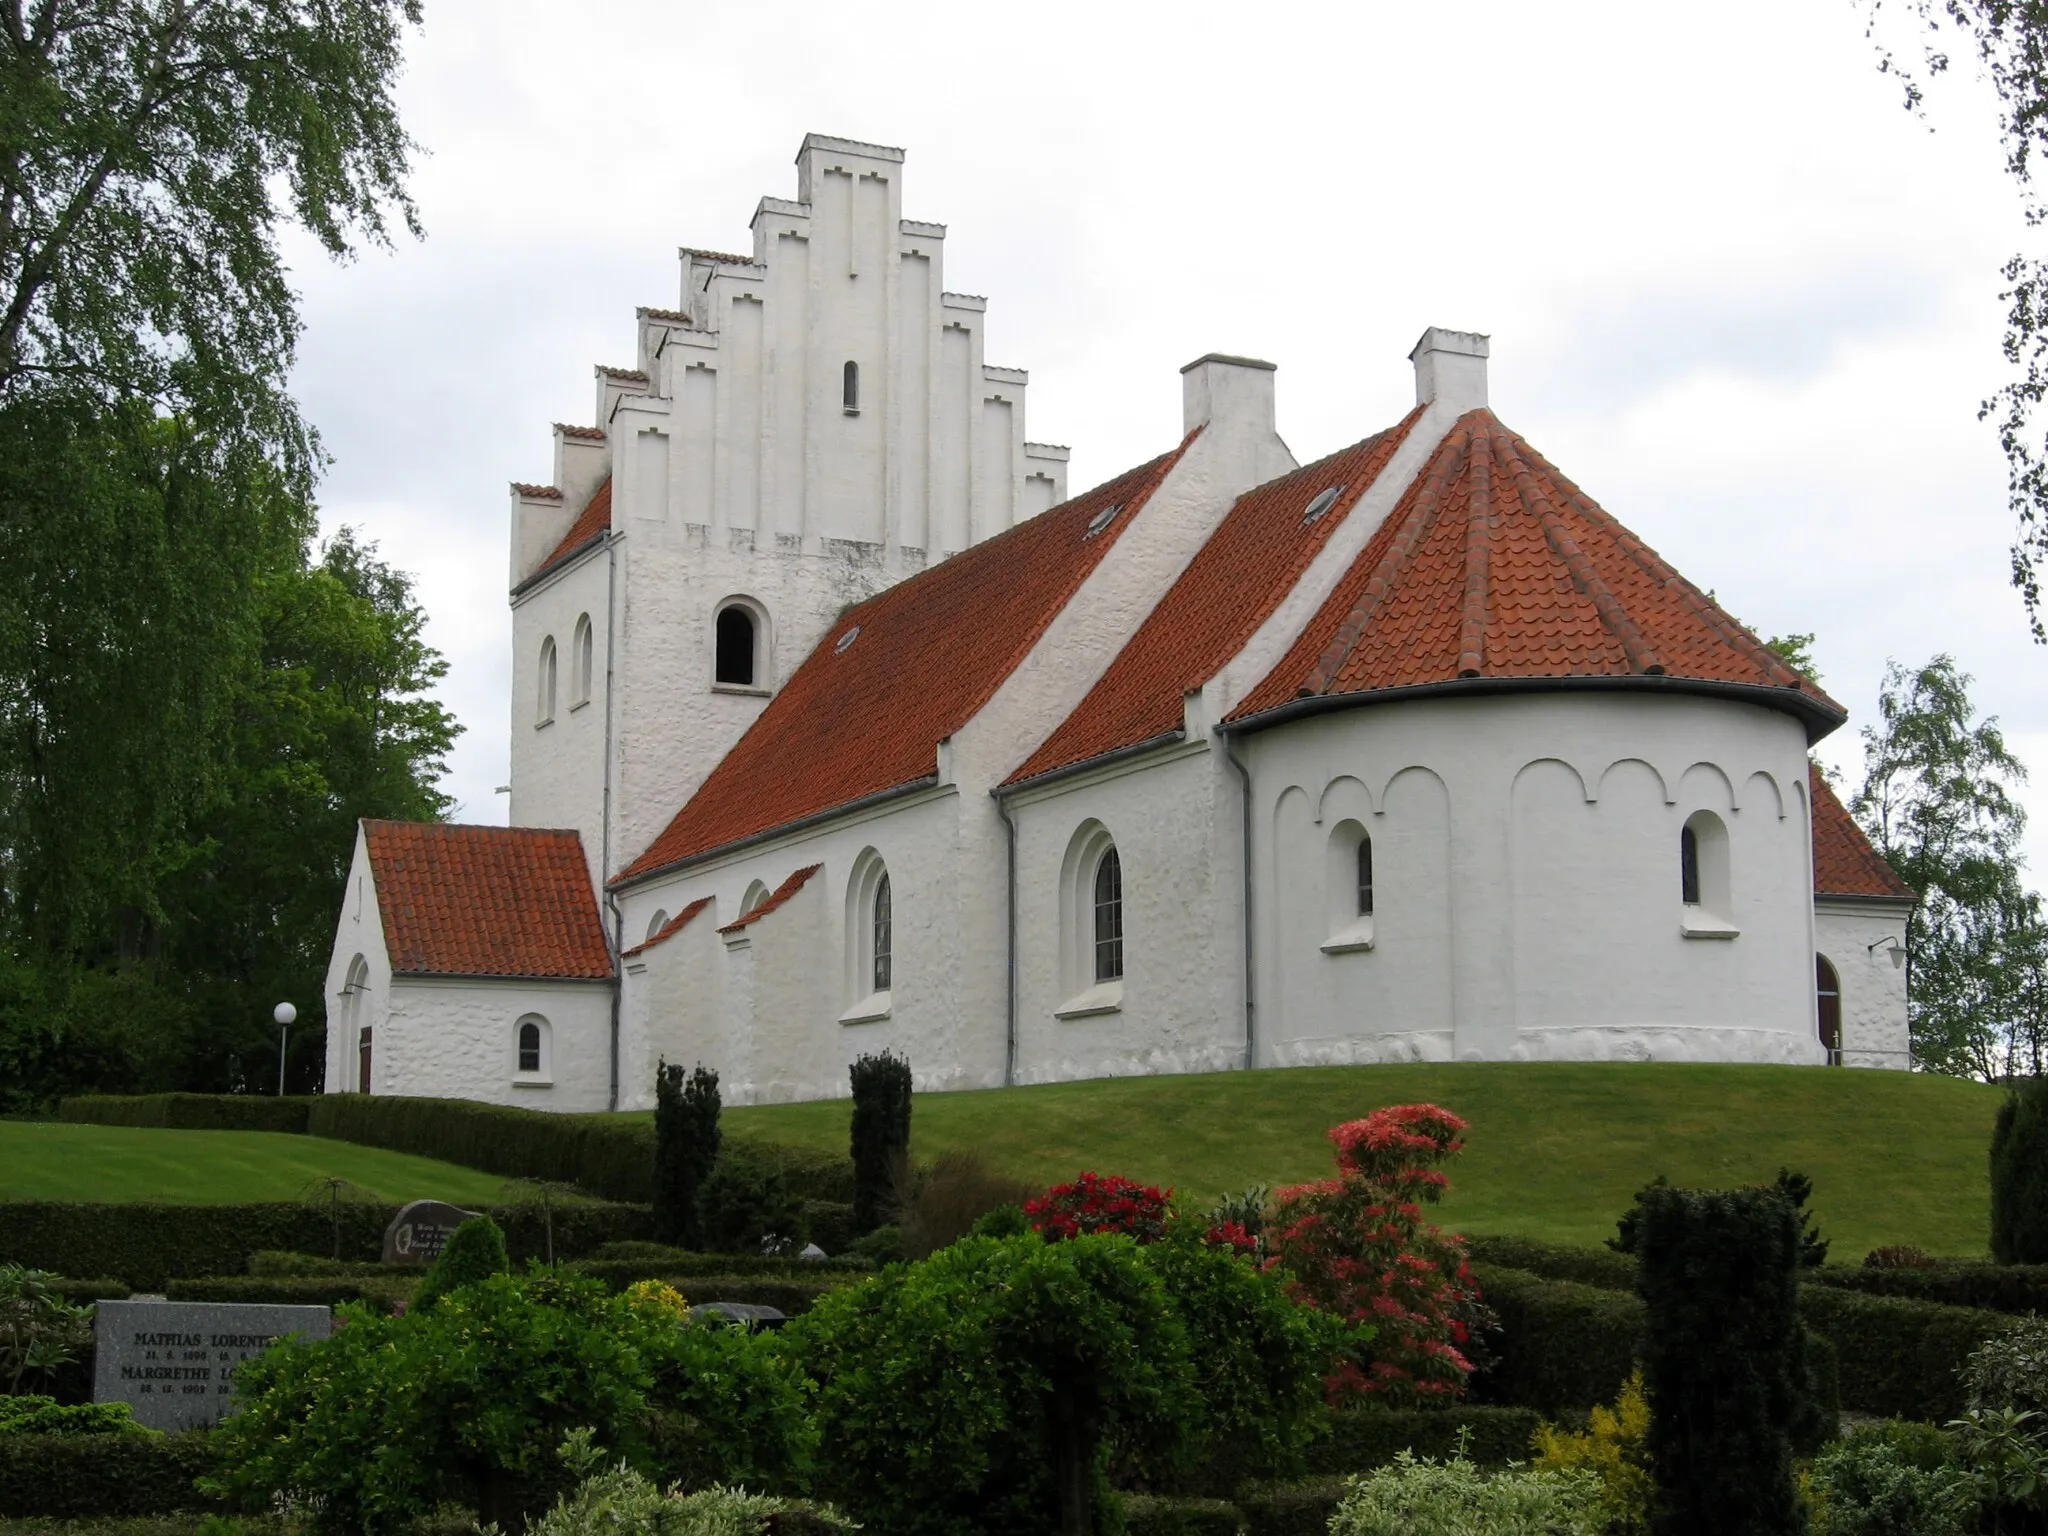 Photo showing: Stenvad Kirke in Stenvad Sogn, Nørre Djurs Kommune, Denmark. Viewed from southeast.